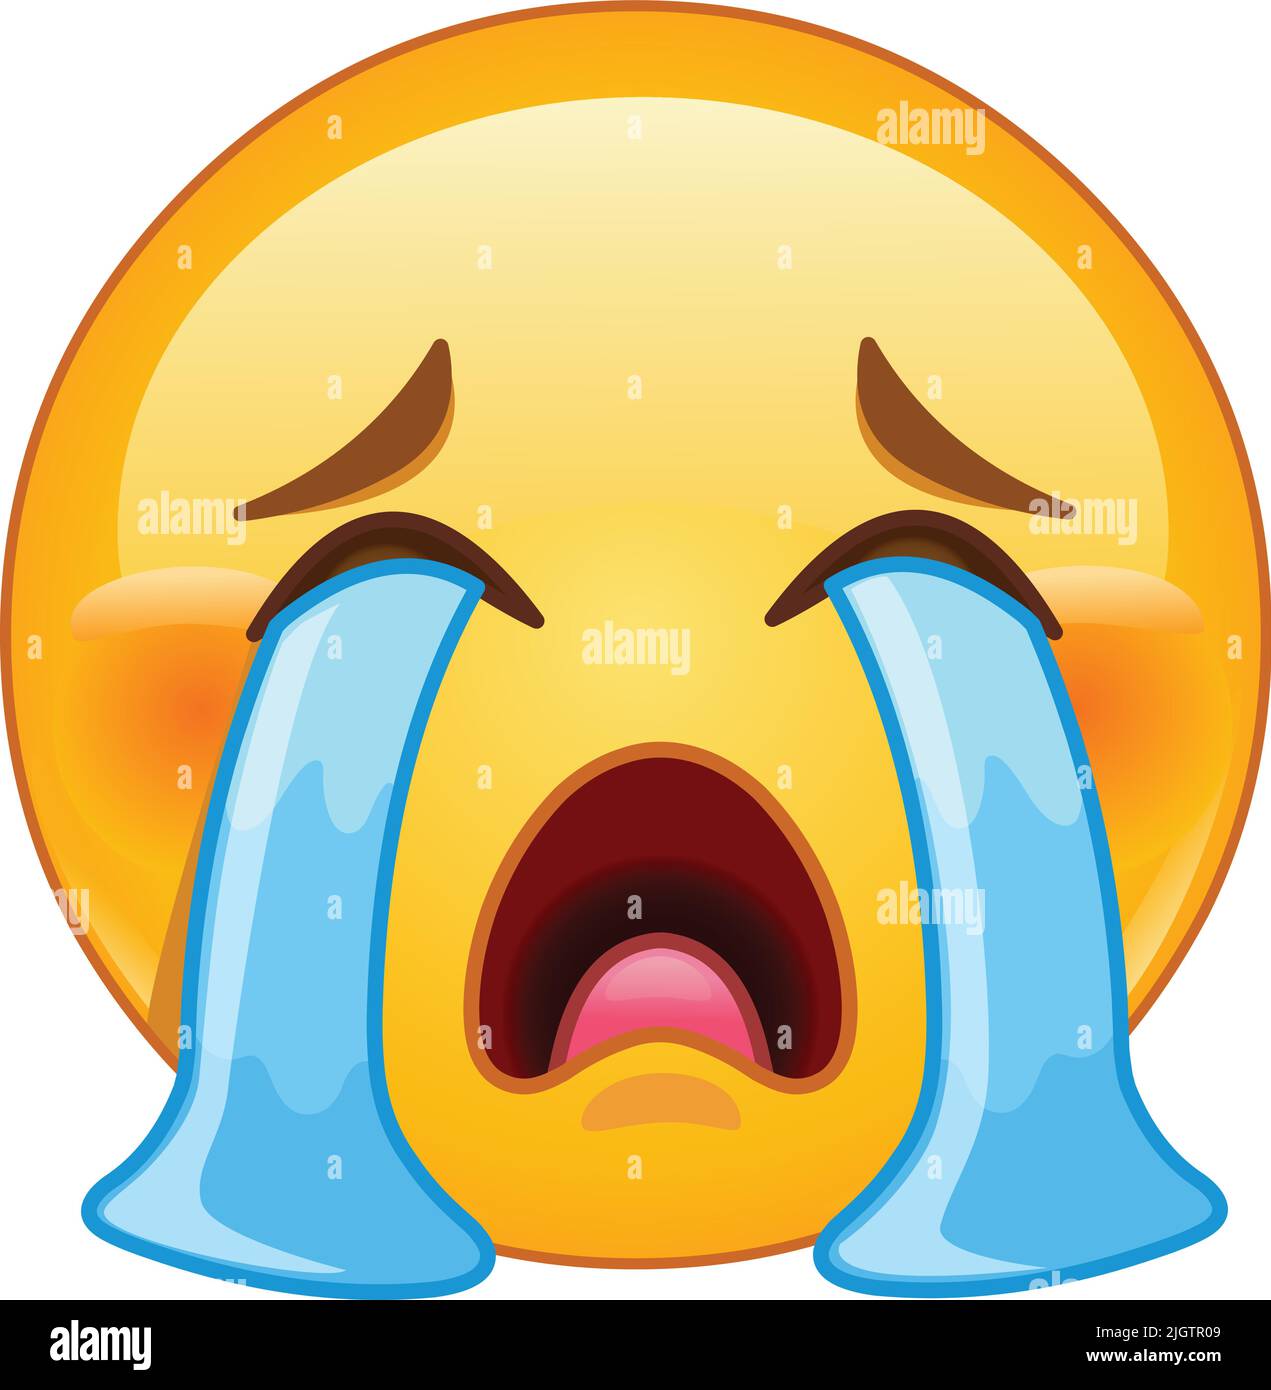 Emoji emoticon face loudly crying Stock Vector